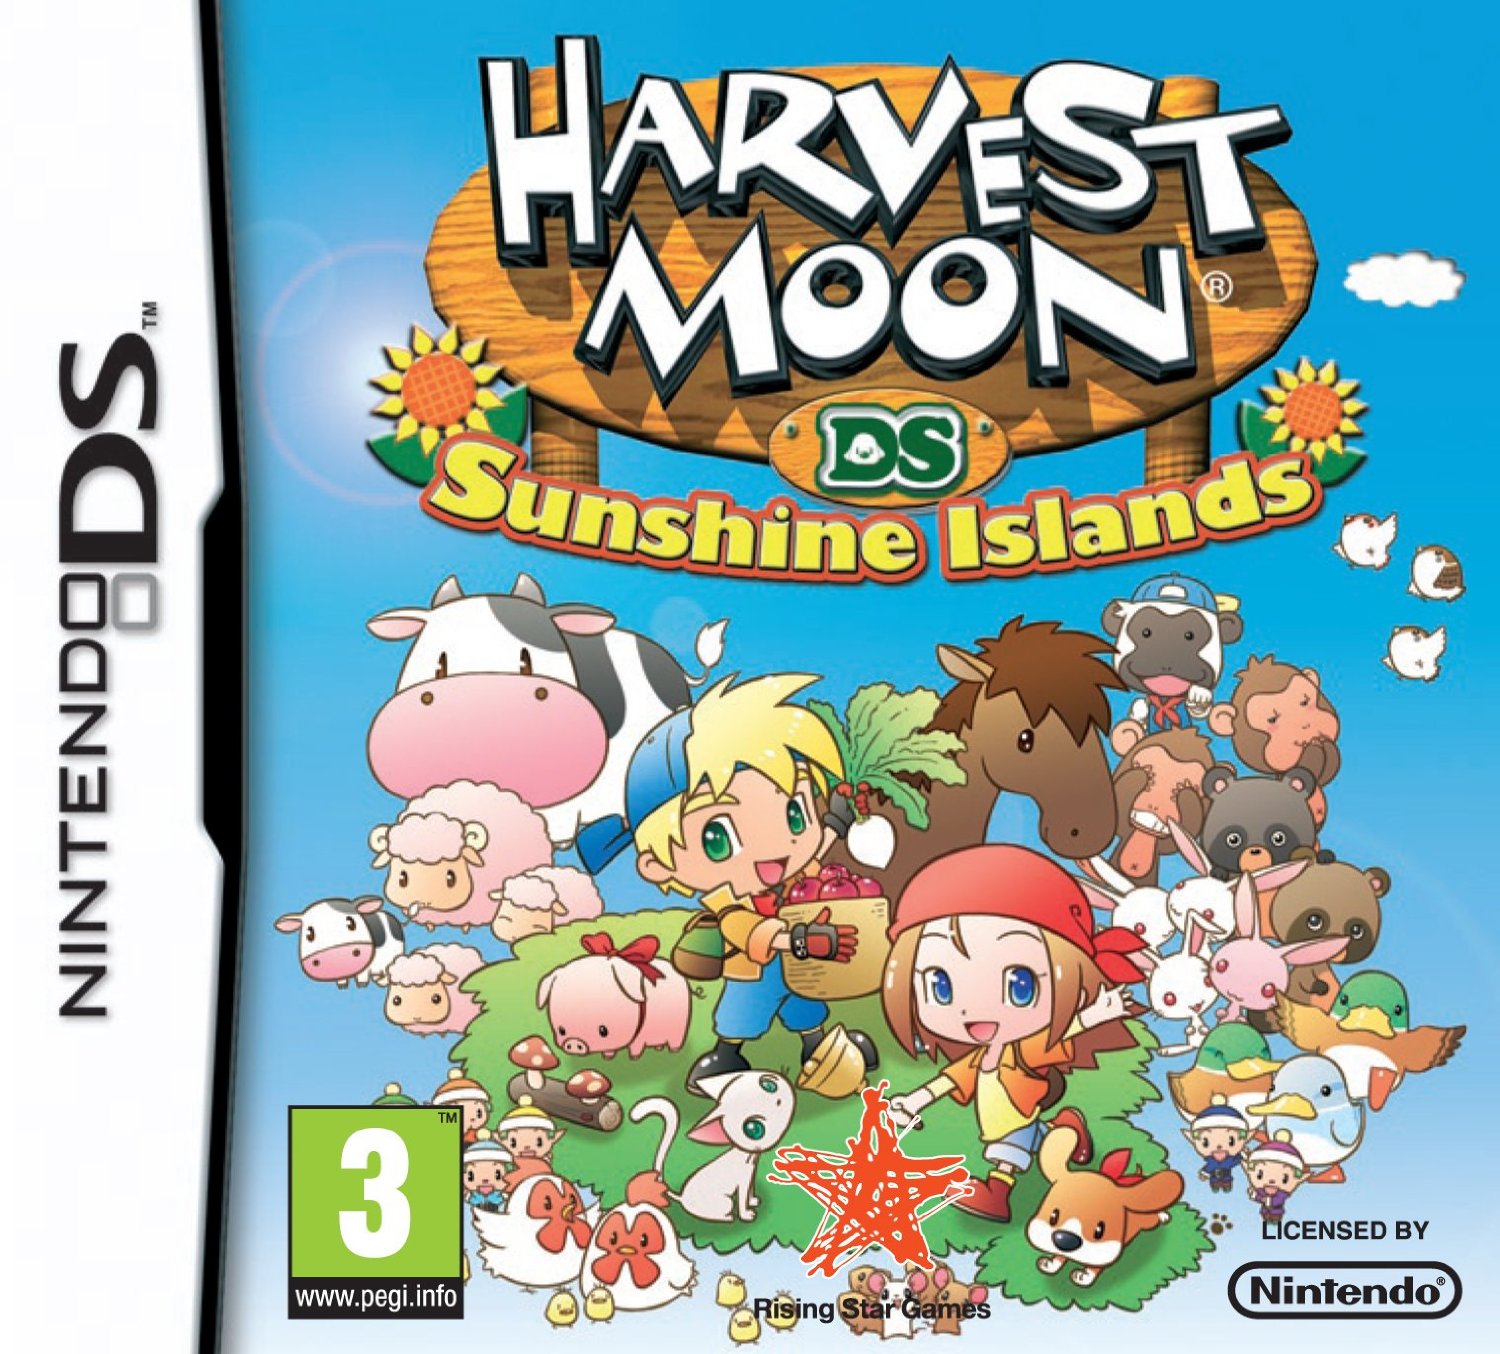 Harvest Moon Sunshine Islands DS